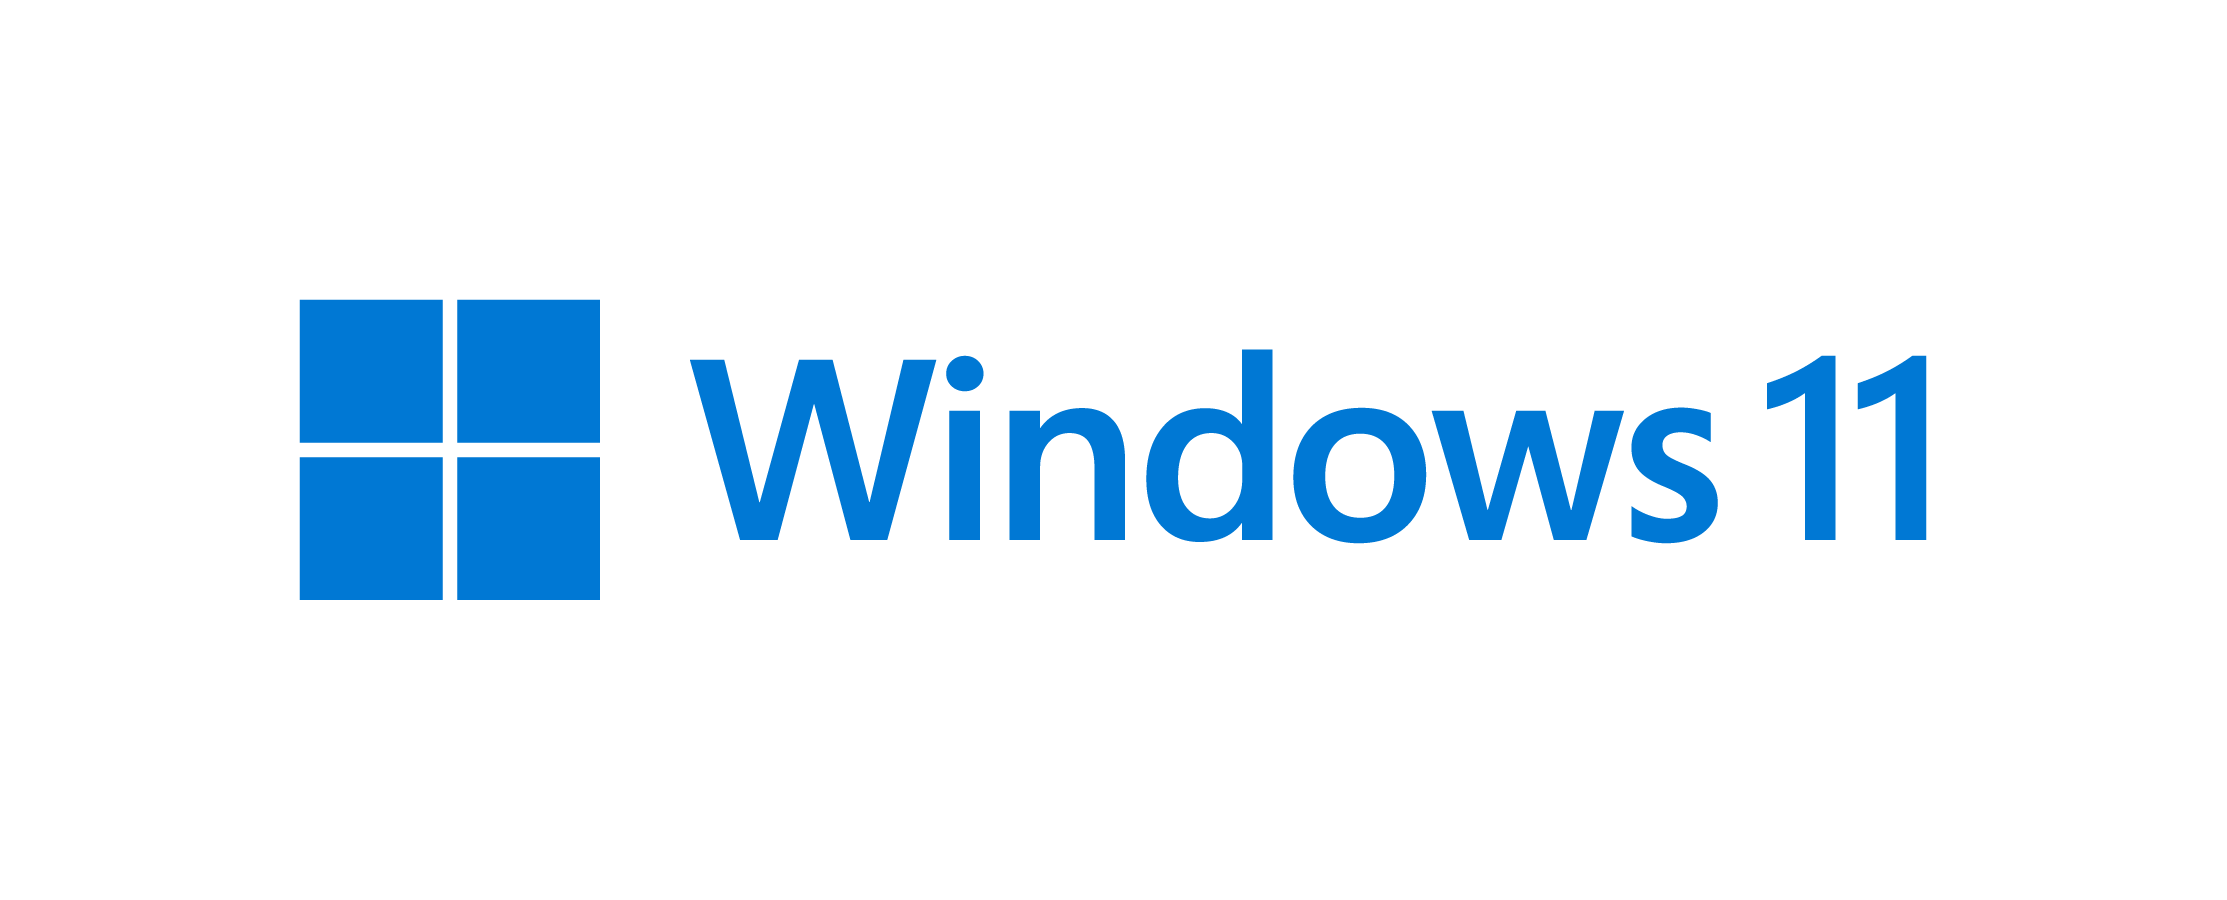 Introducing Windows 11 – Press materials for Windows 11 news ...